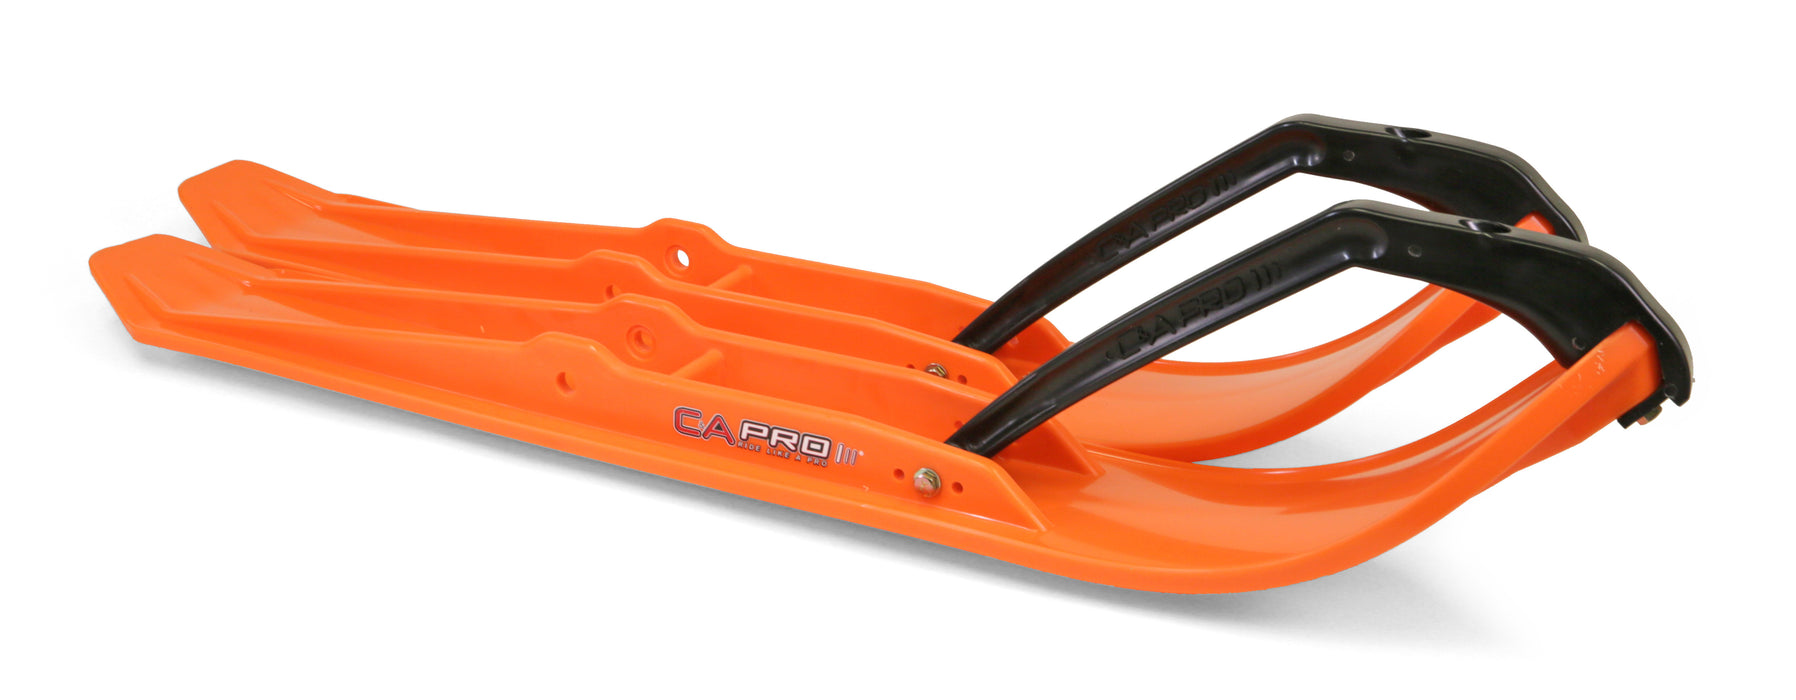 C&A Pro Xpt Skis Orange 77100420